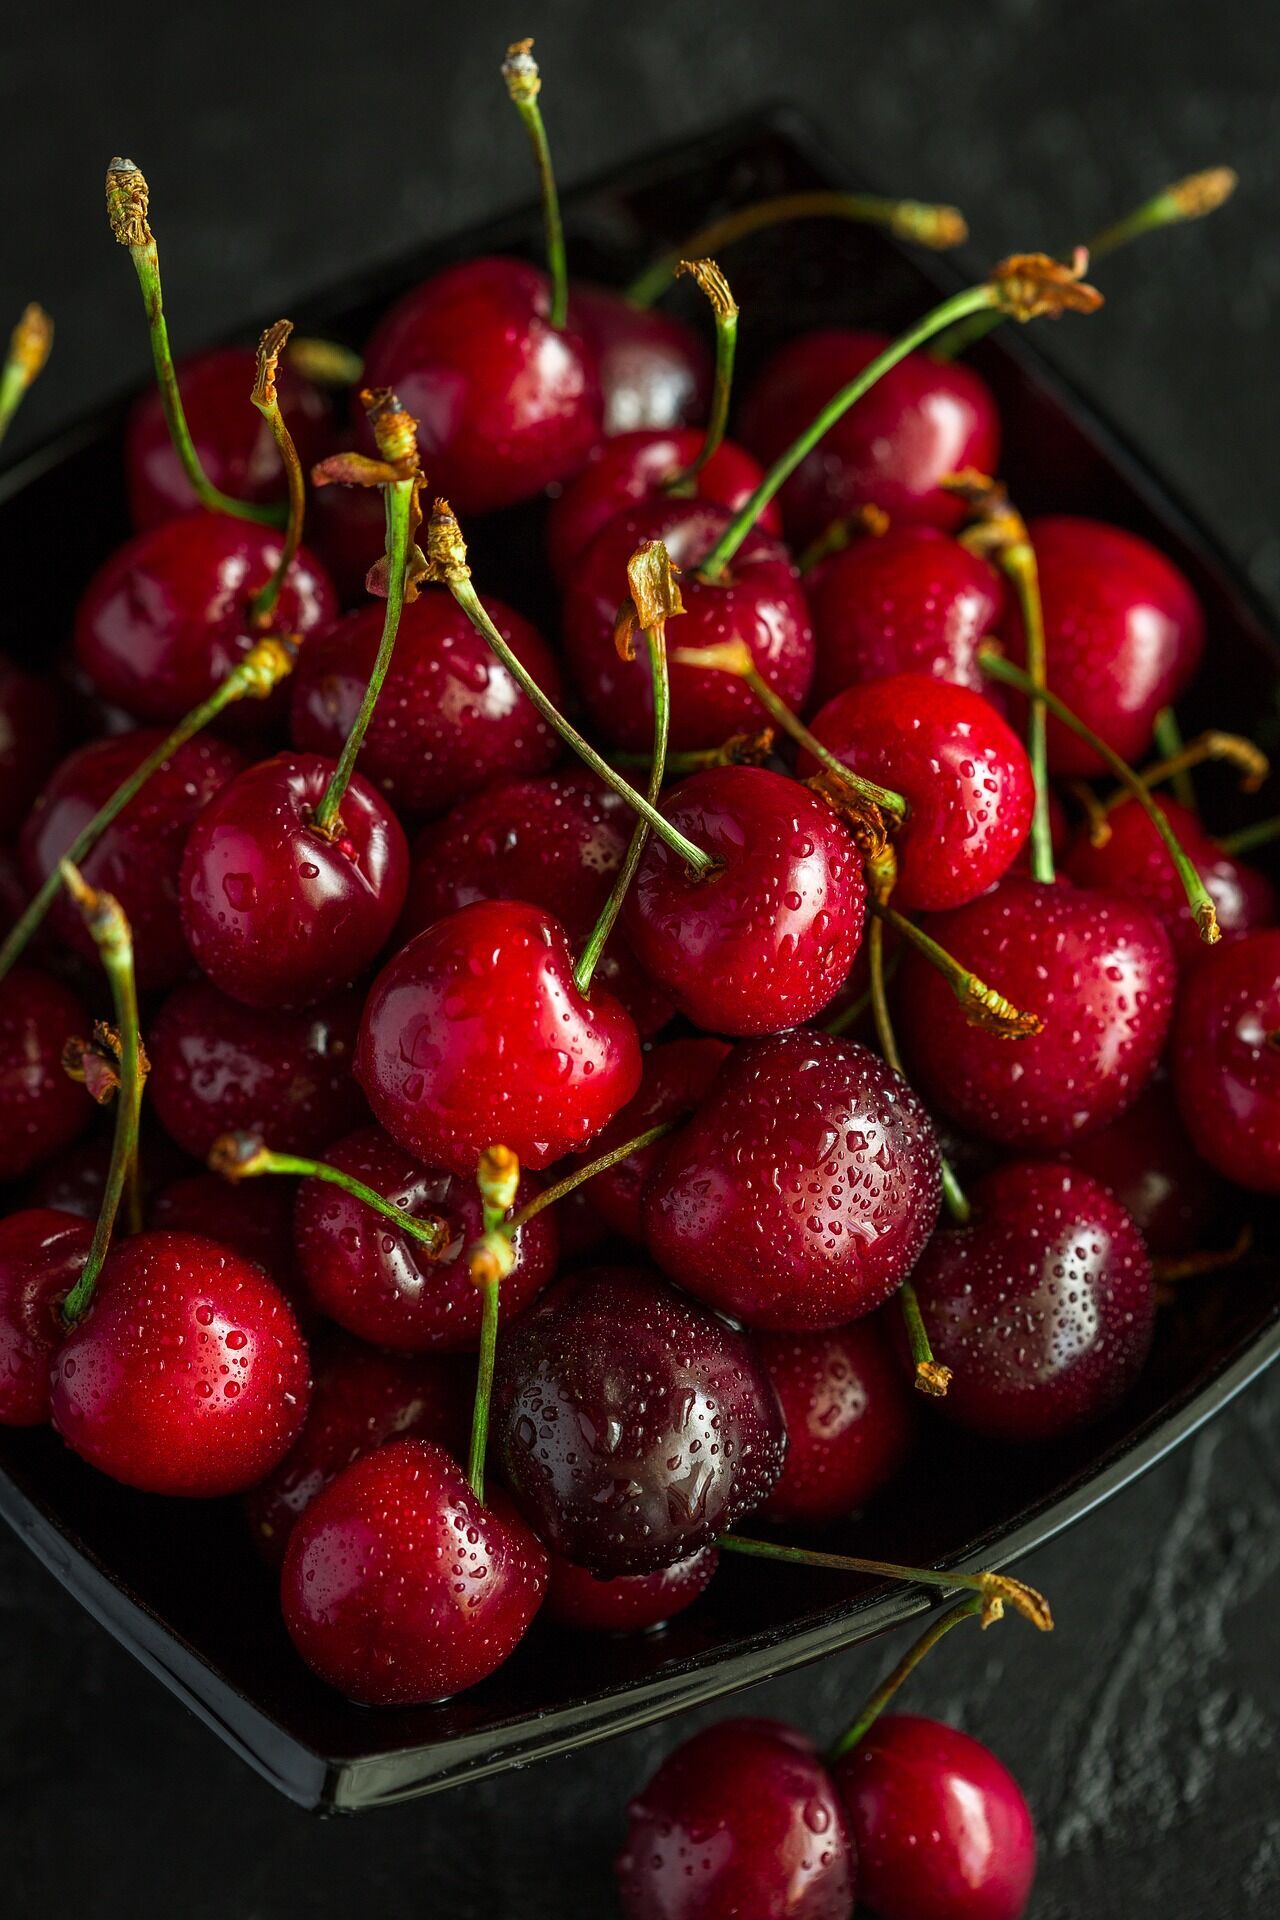 Home-grown ripe cherries